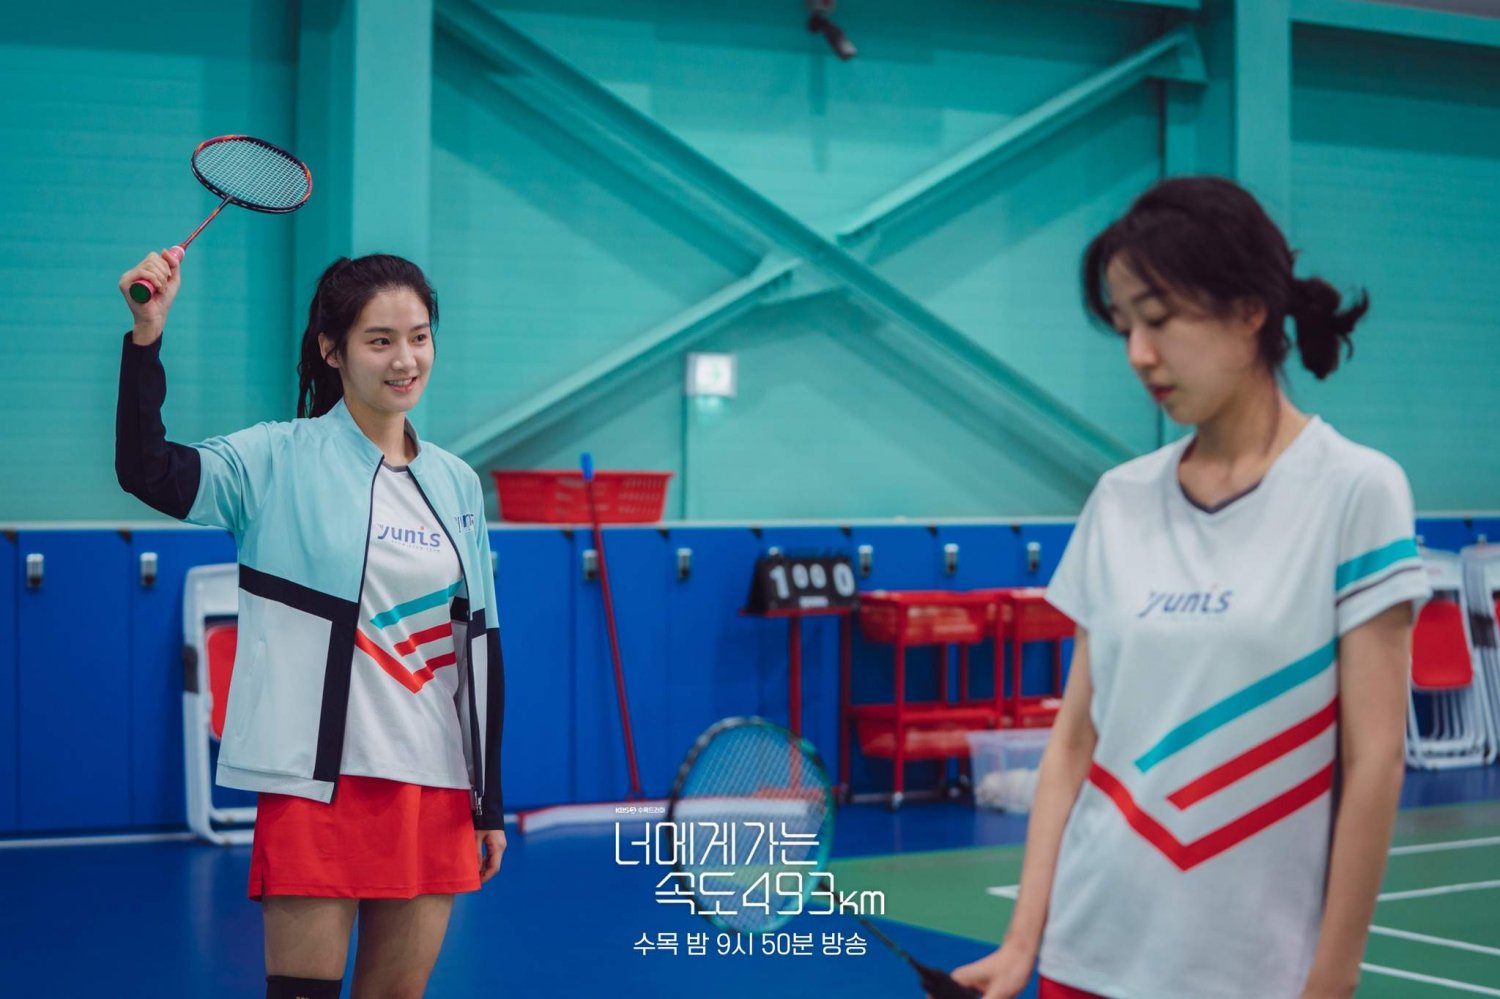 Photos] New Stills Added for the Korean Drama 'Love All Play' @ HanCinema